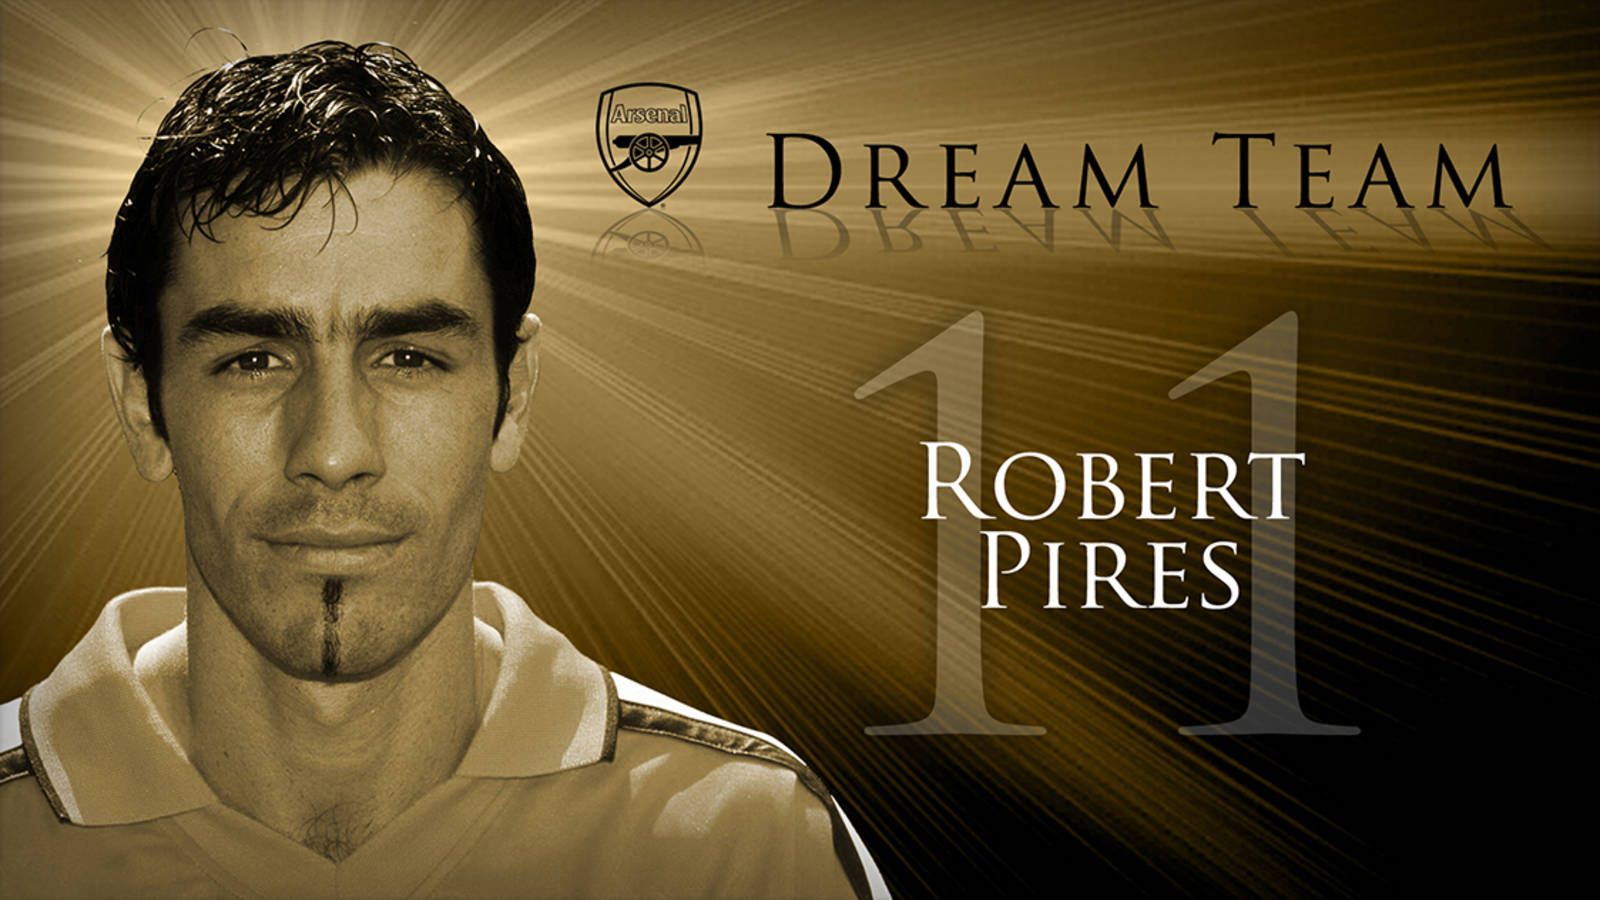 Arsenal Dream Team: 11. Robert Pires .arsenal.com